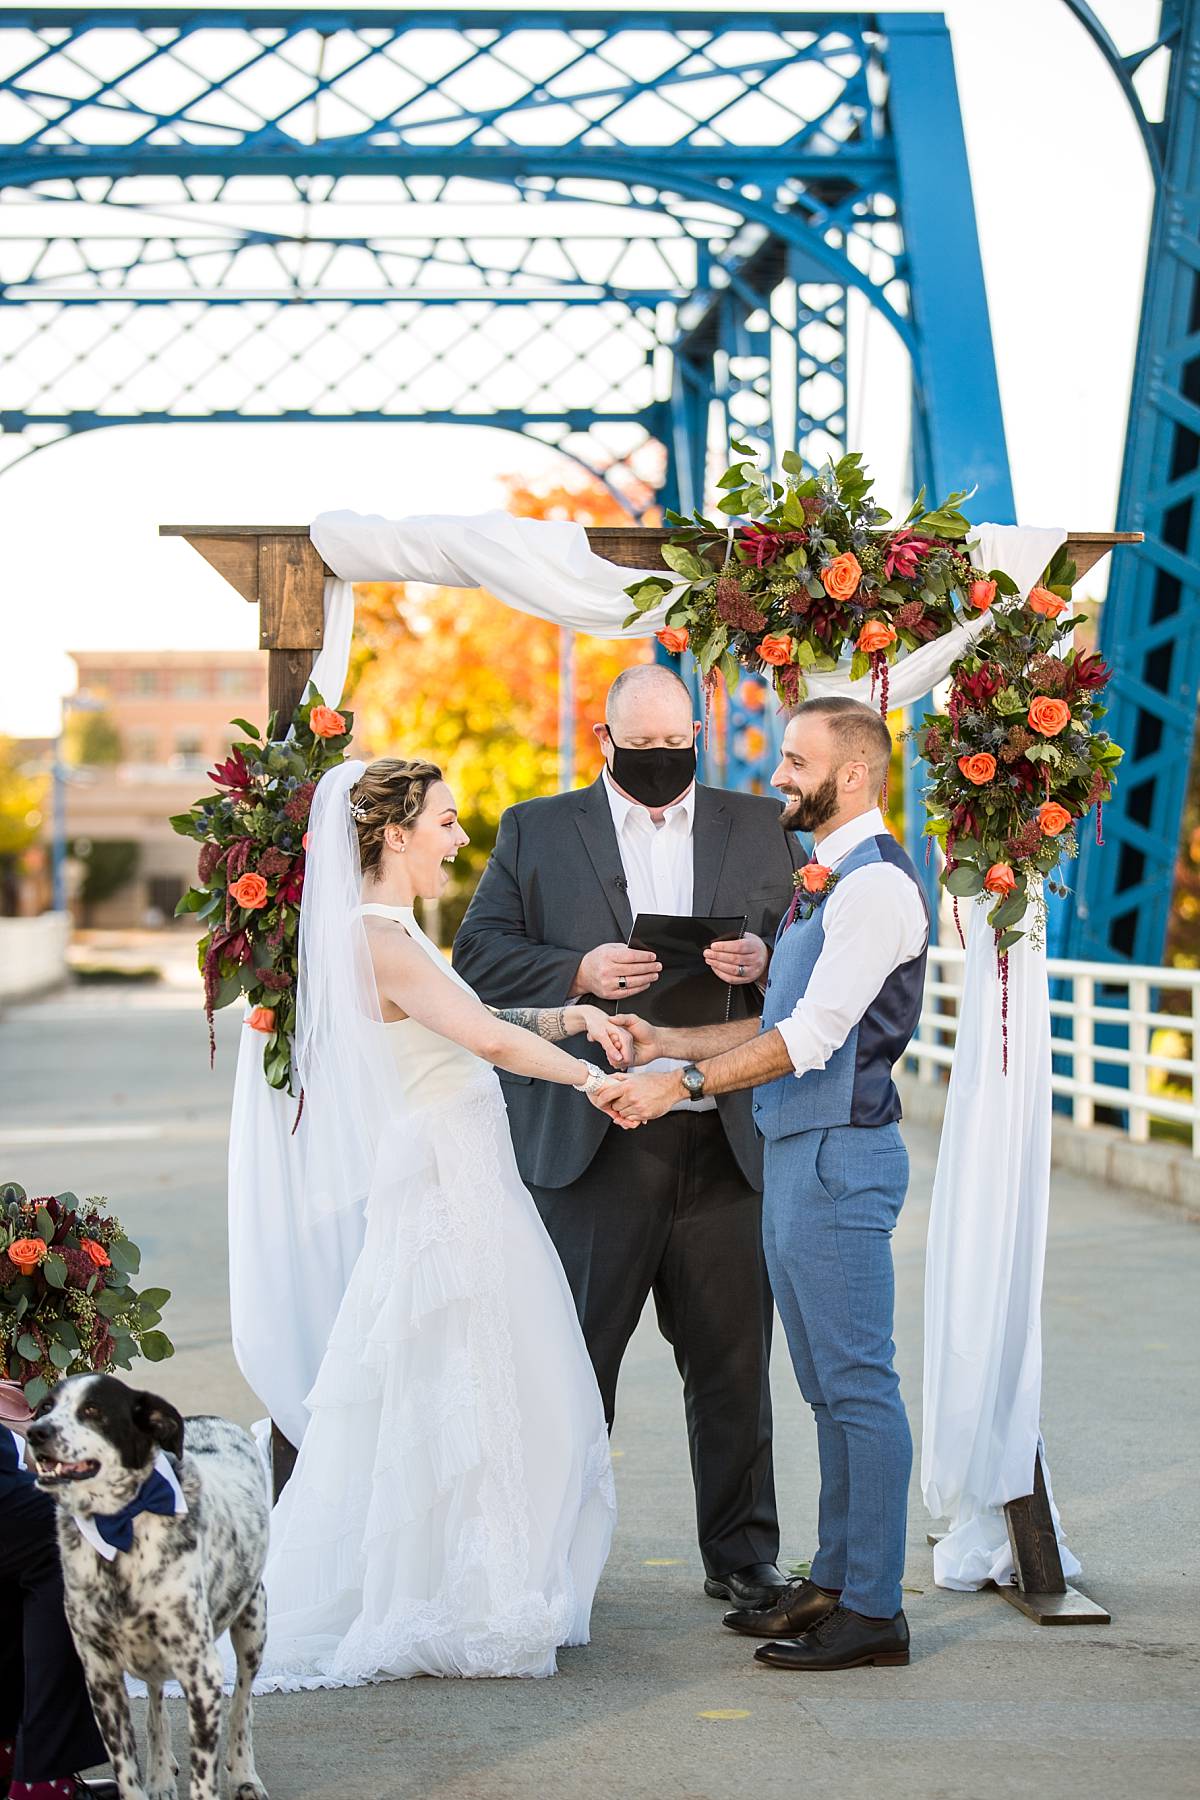 Intimate wedding ceremony at the Grand Rapids Blue Bridge